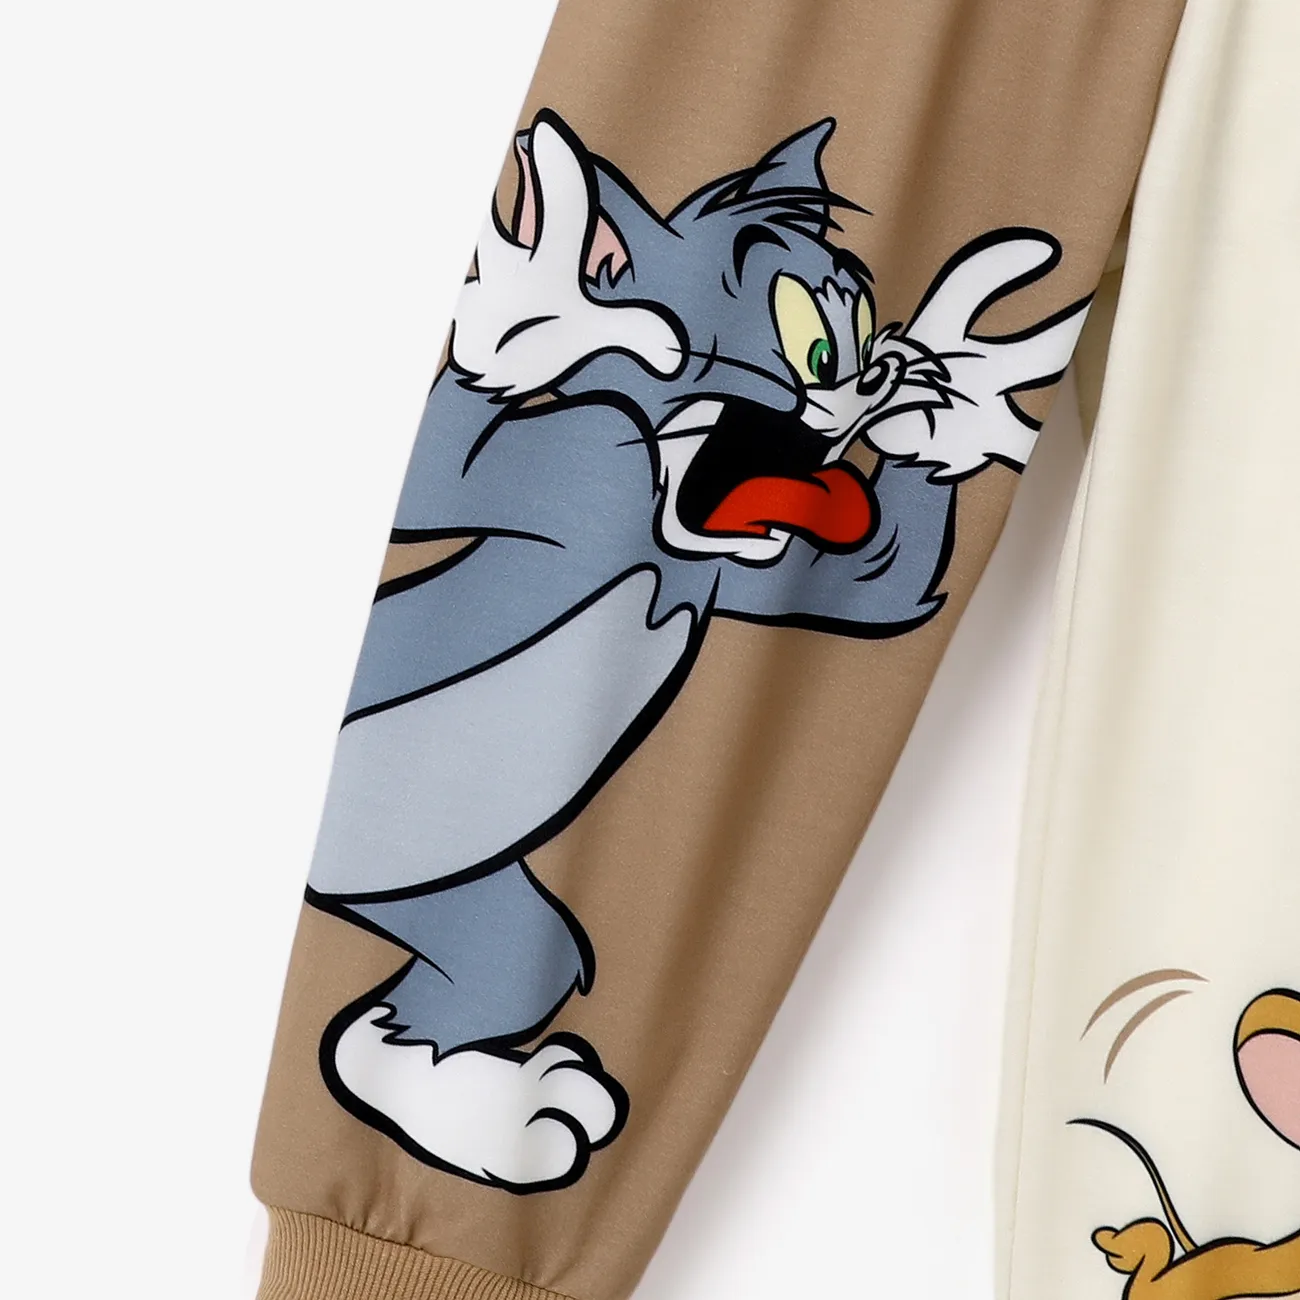 Tom and Jerry 小童 男 童趣 卫衣套裝 彩色 big image 1